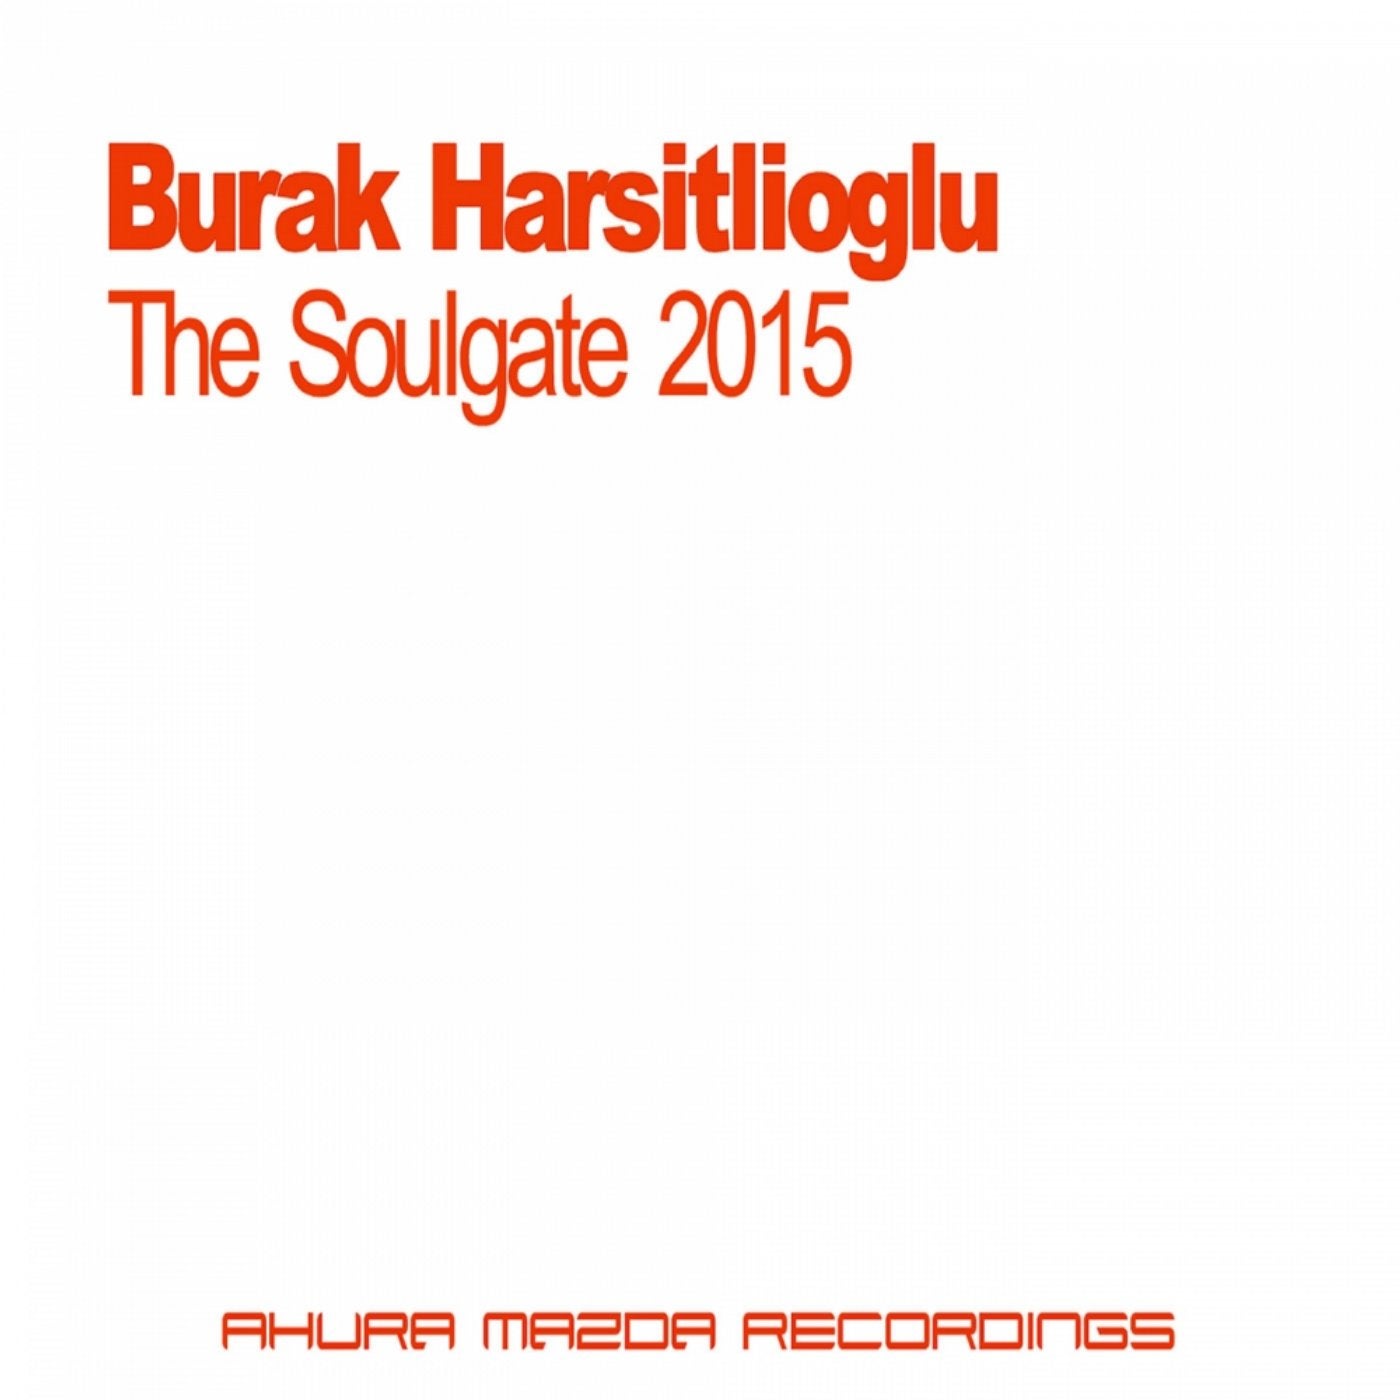 The Soulgate 2015